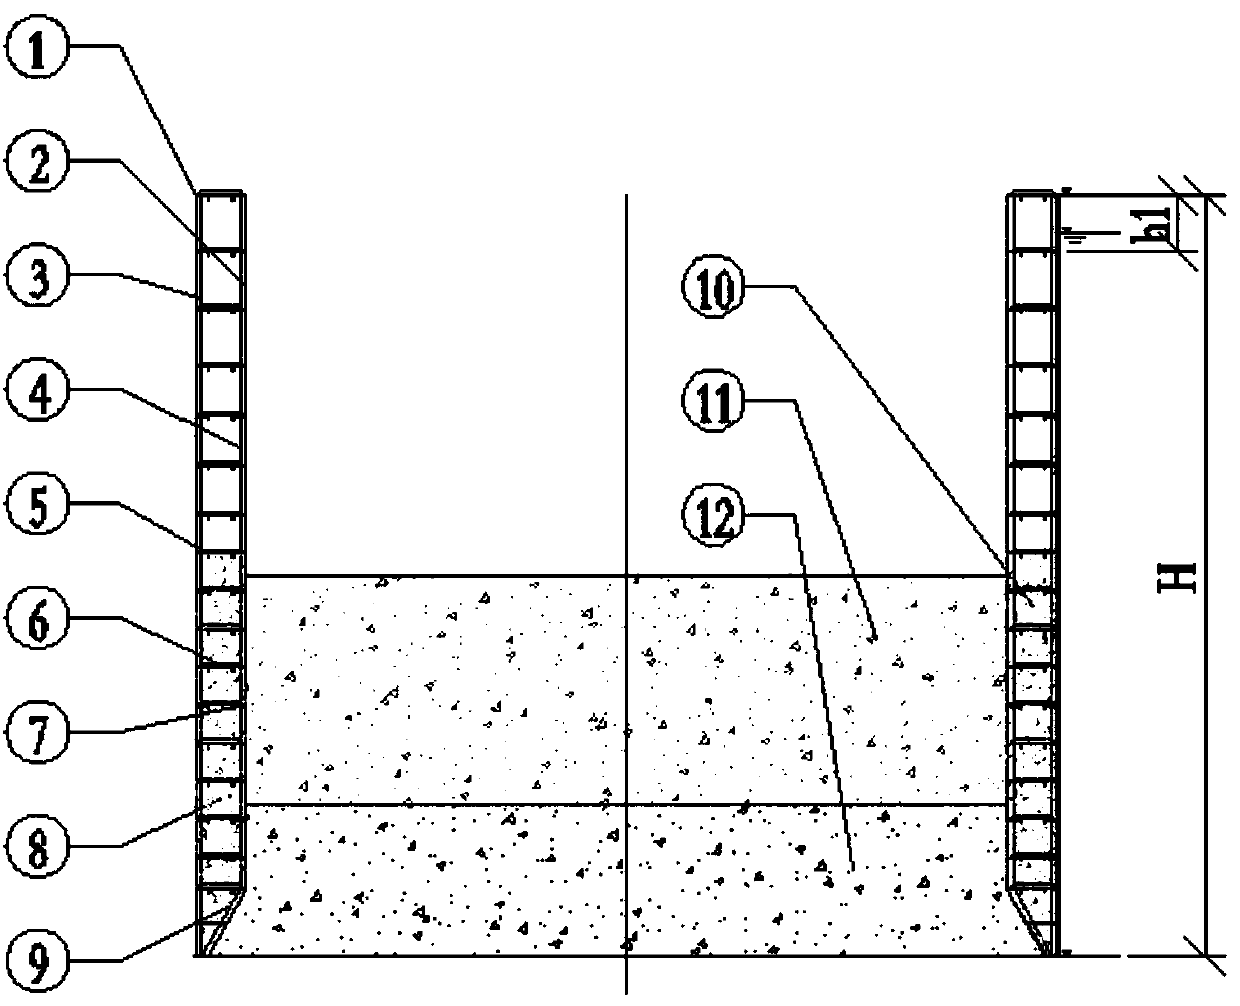 Parametrization design method for round double-wall steel cofferdam